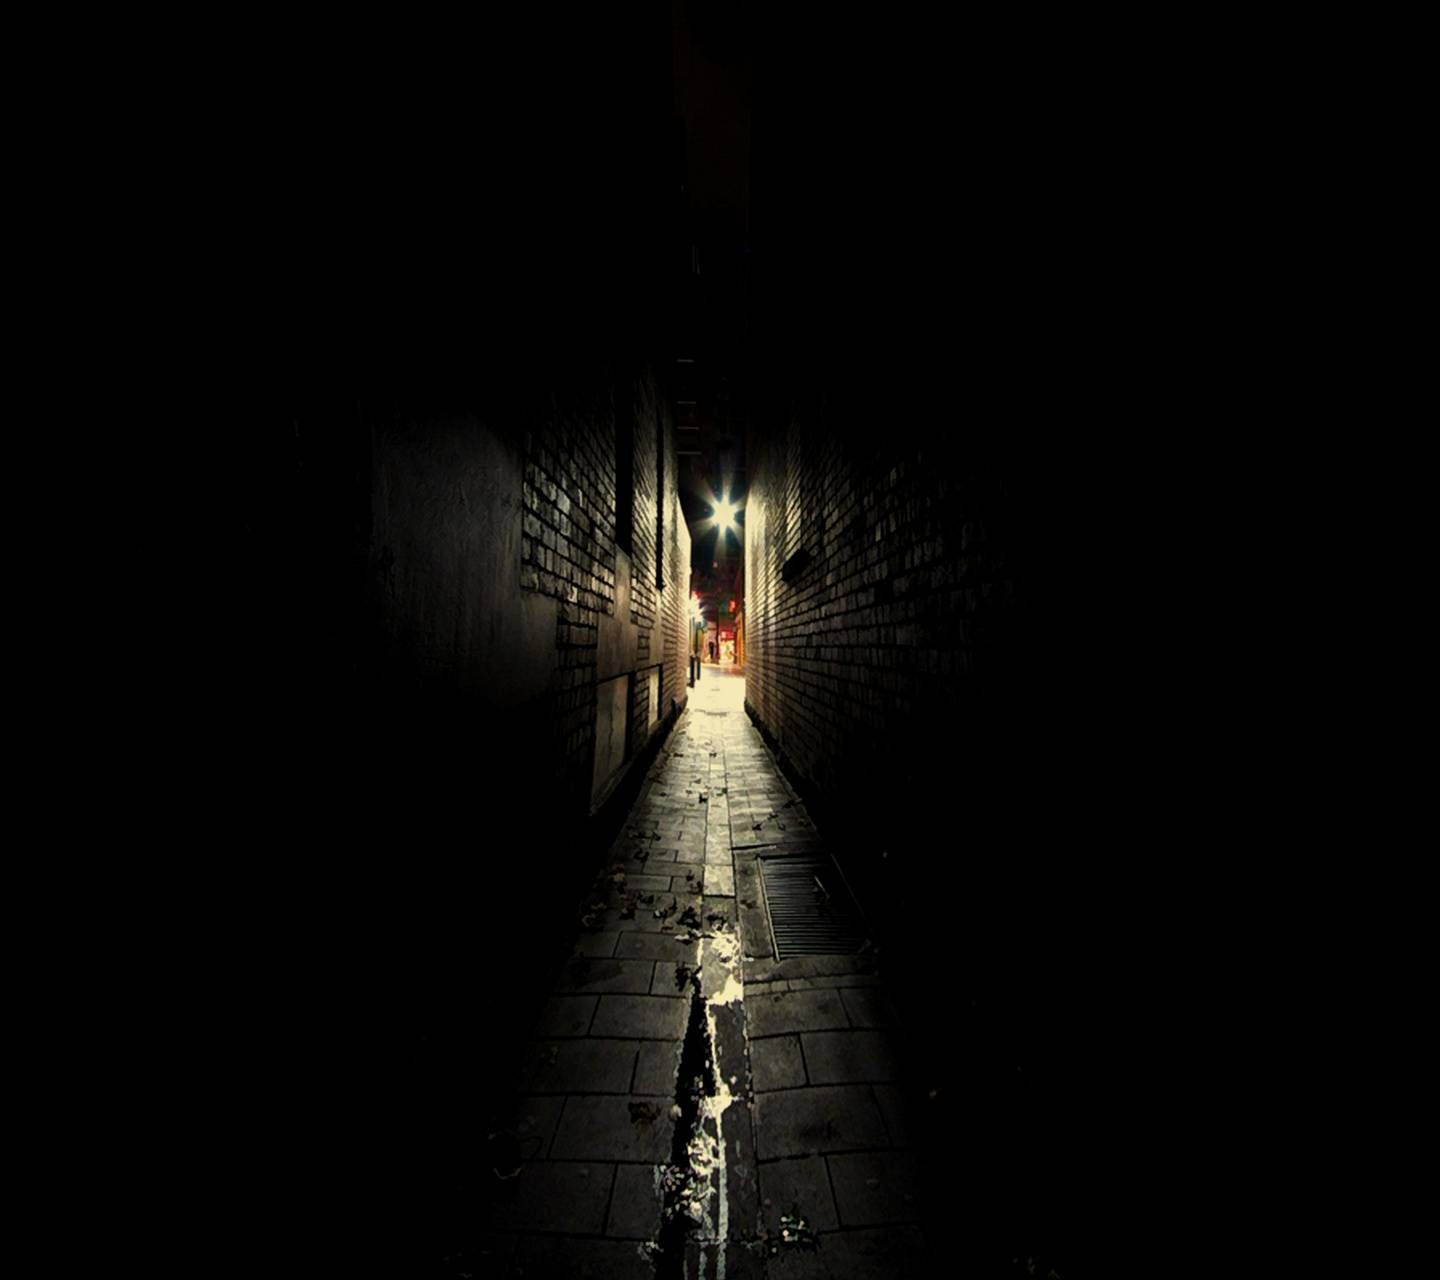 Lonely Dark Passage wallpaper by .zedge.net